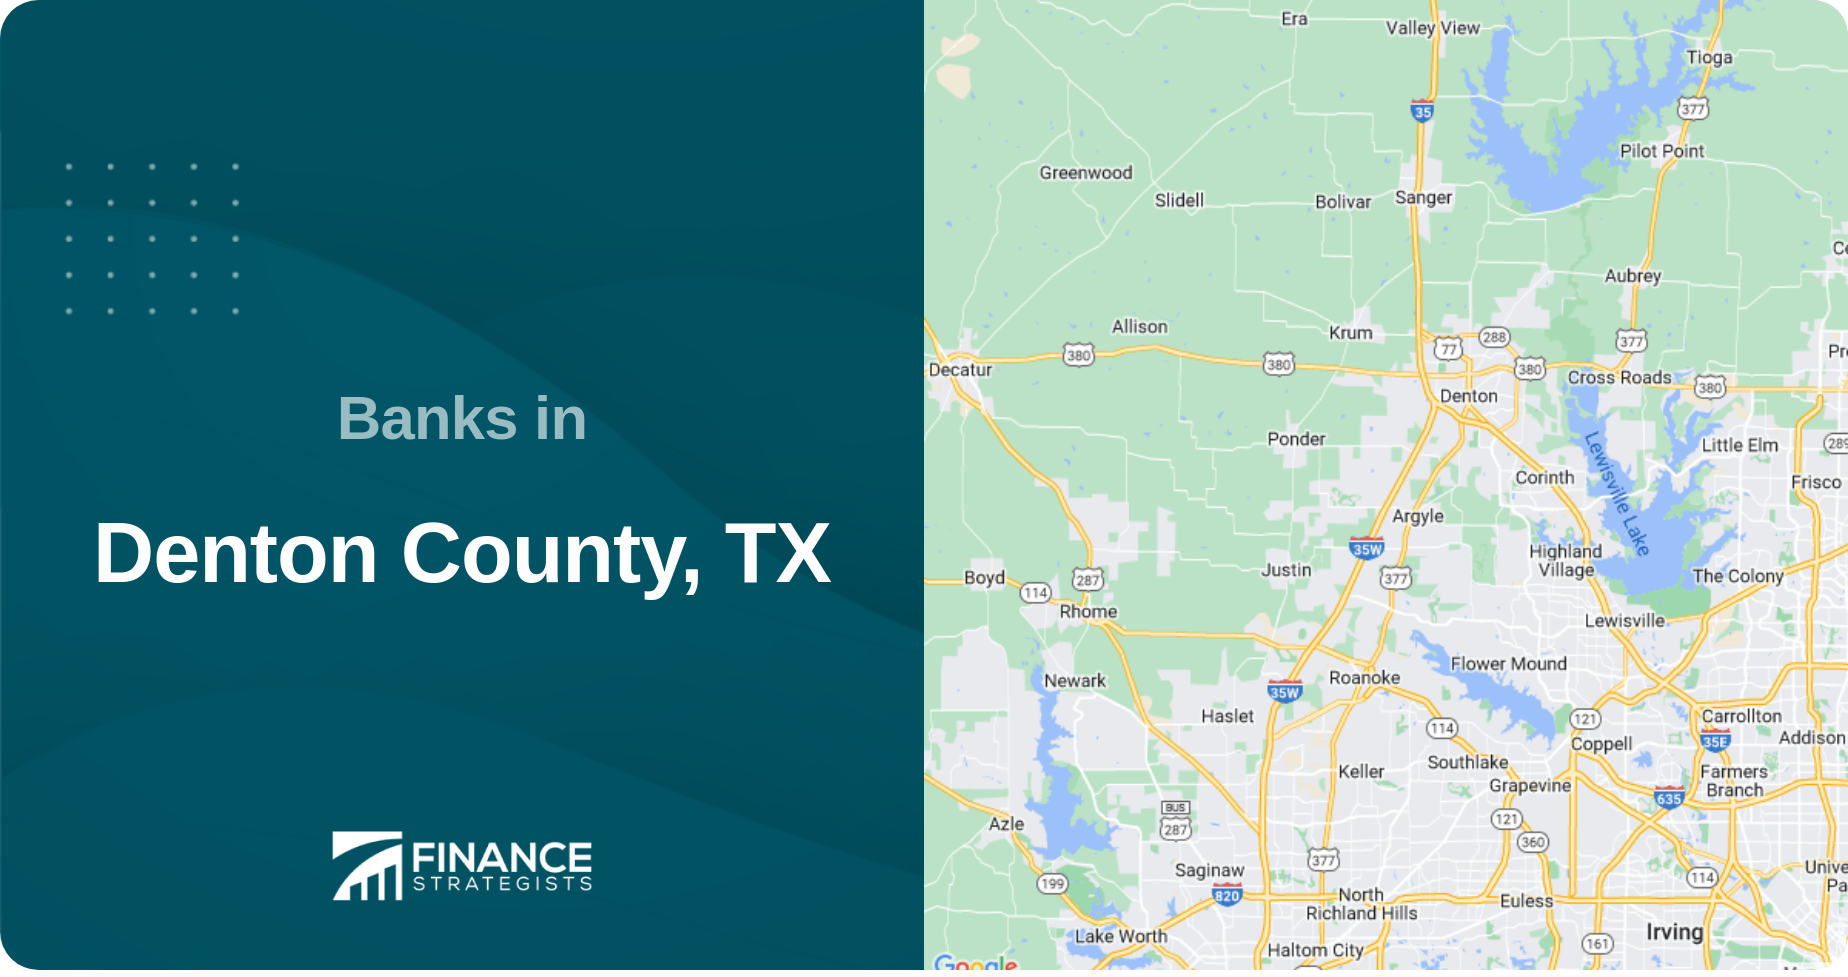 Banks in Denton County, TX